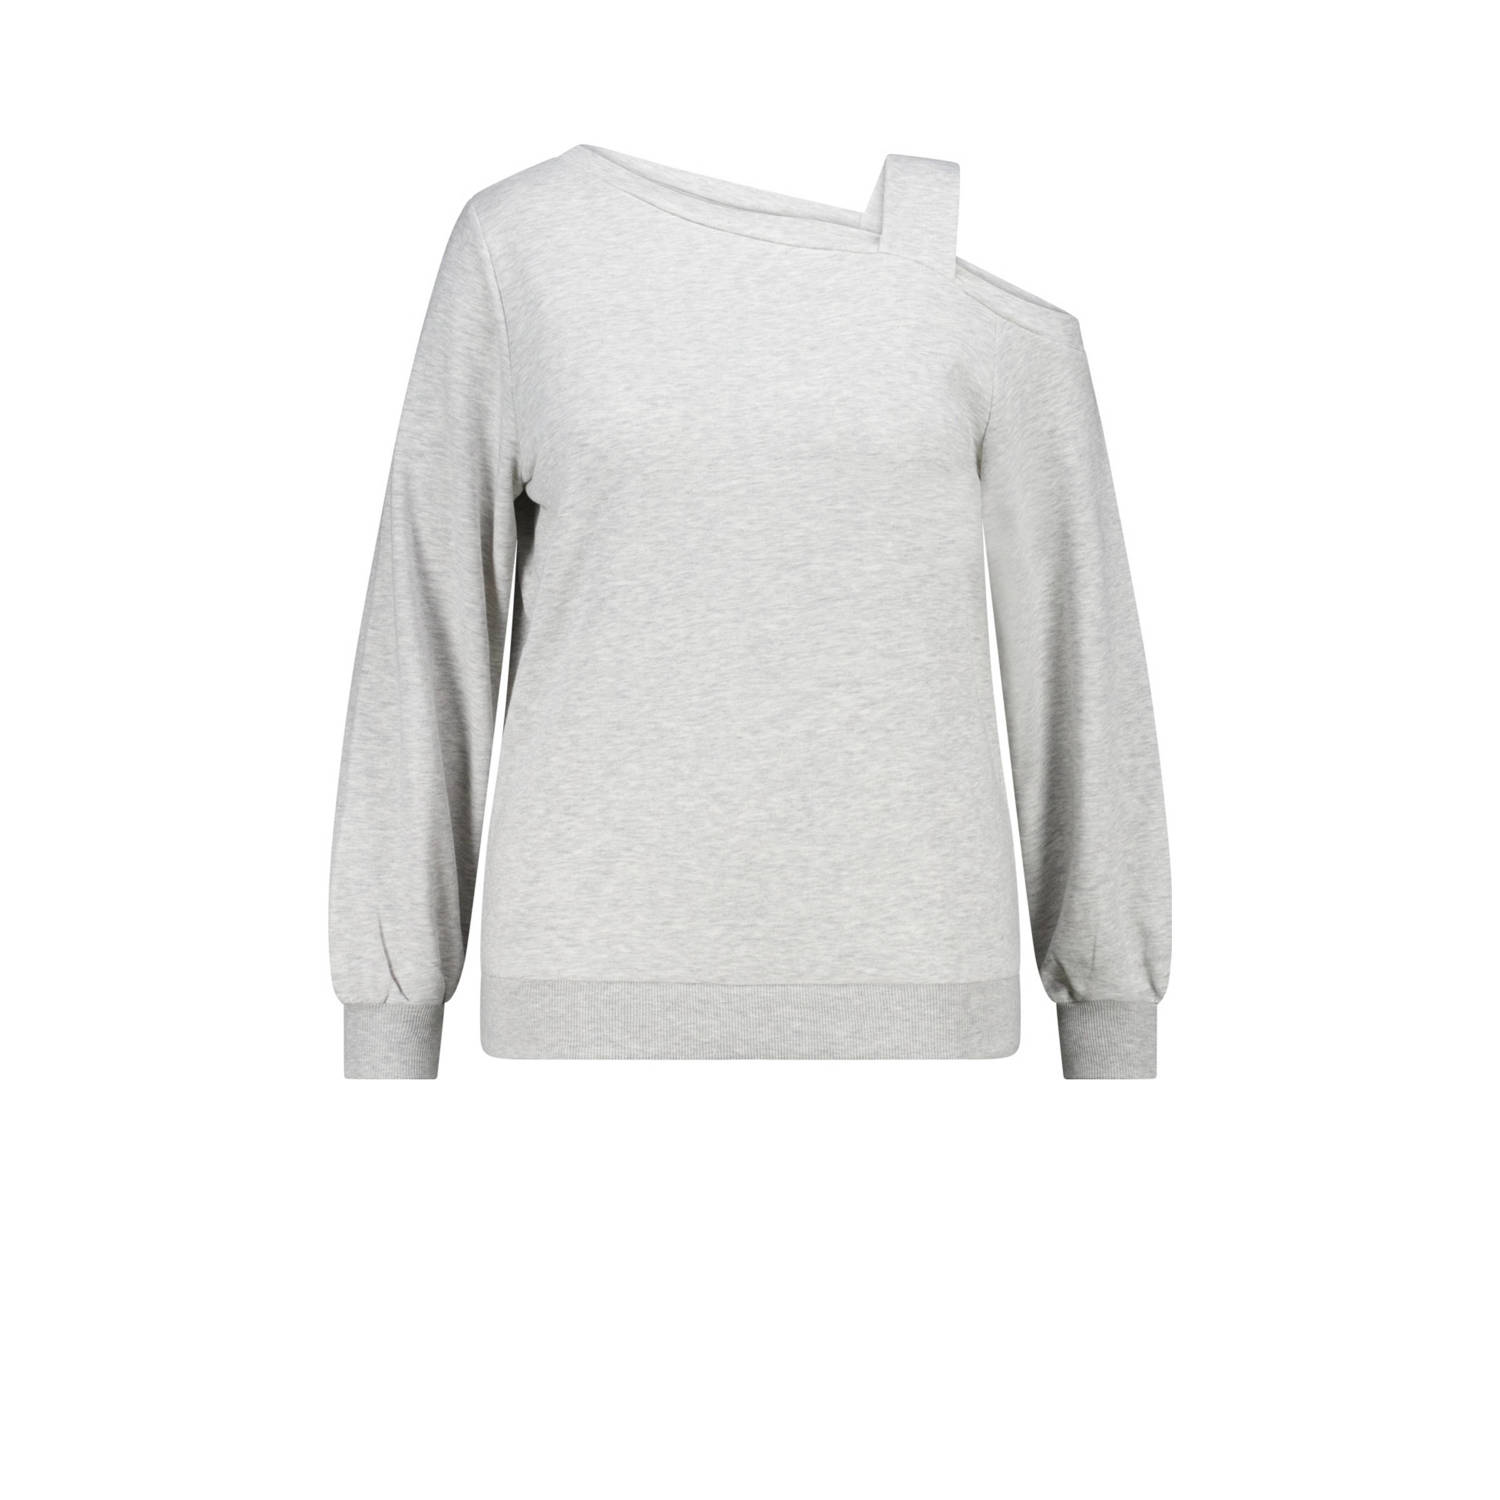 MS Mode sweater lichtgrijs